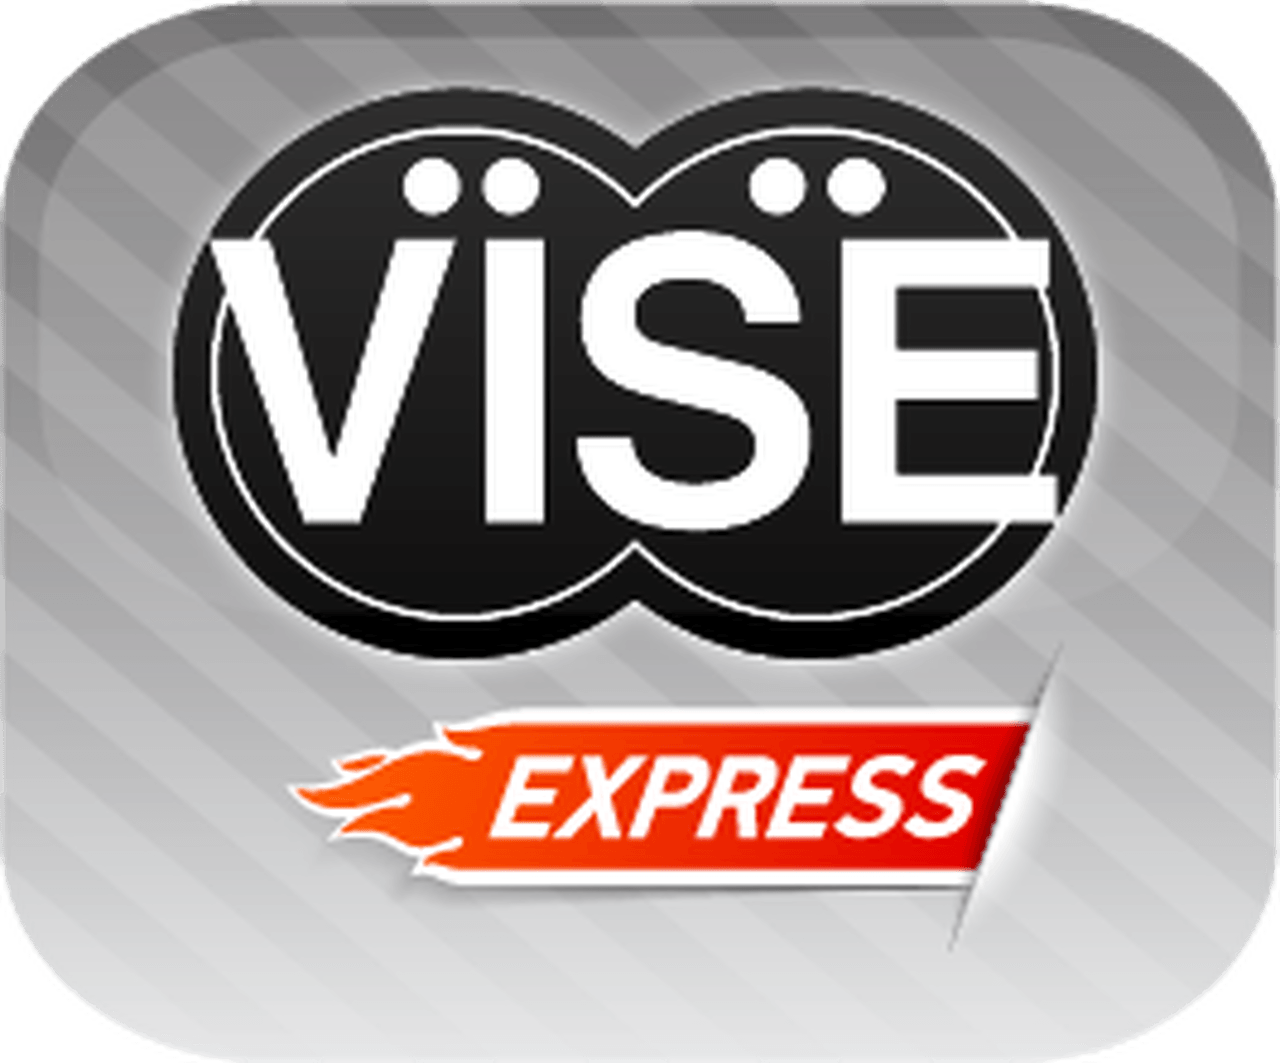 Vise Logo - EXPRESS-Jerseys - EXPRESS-Vise - Logo Infusion